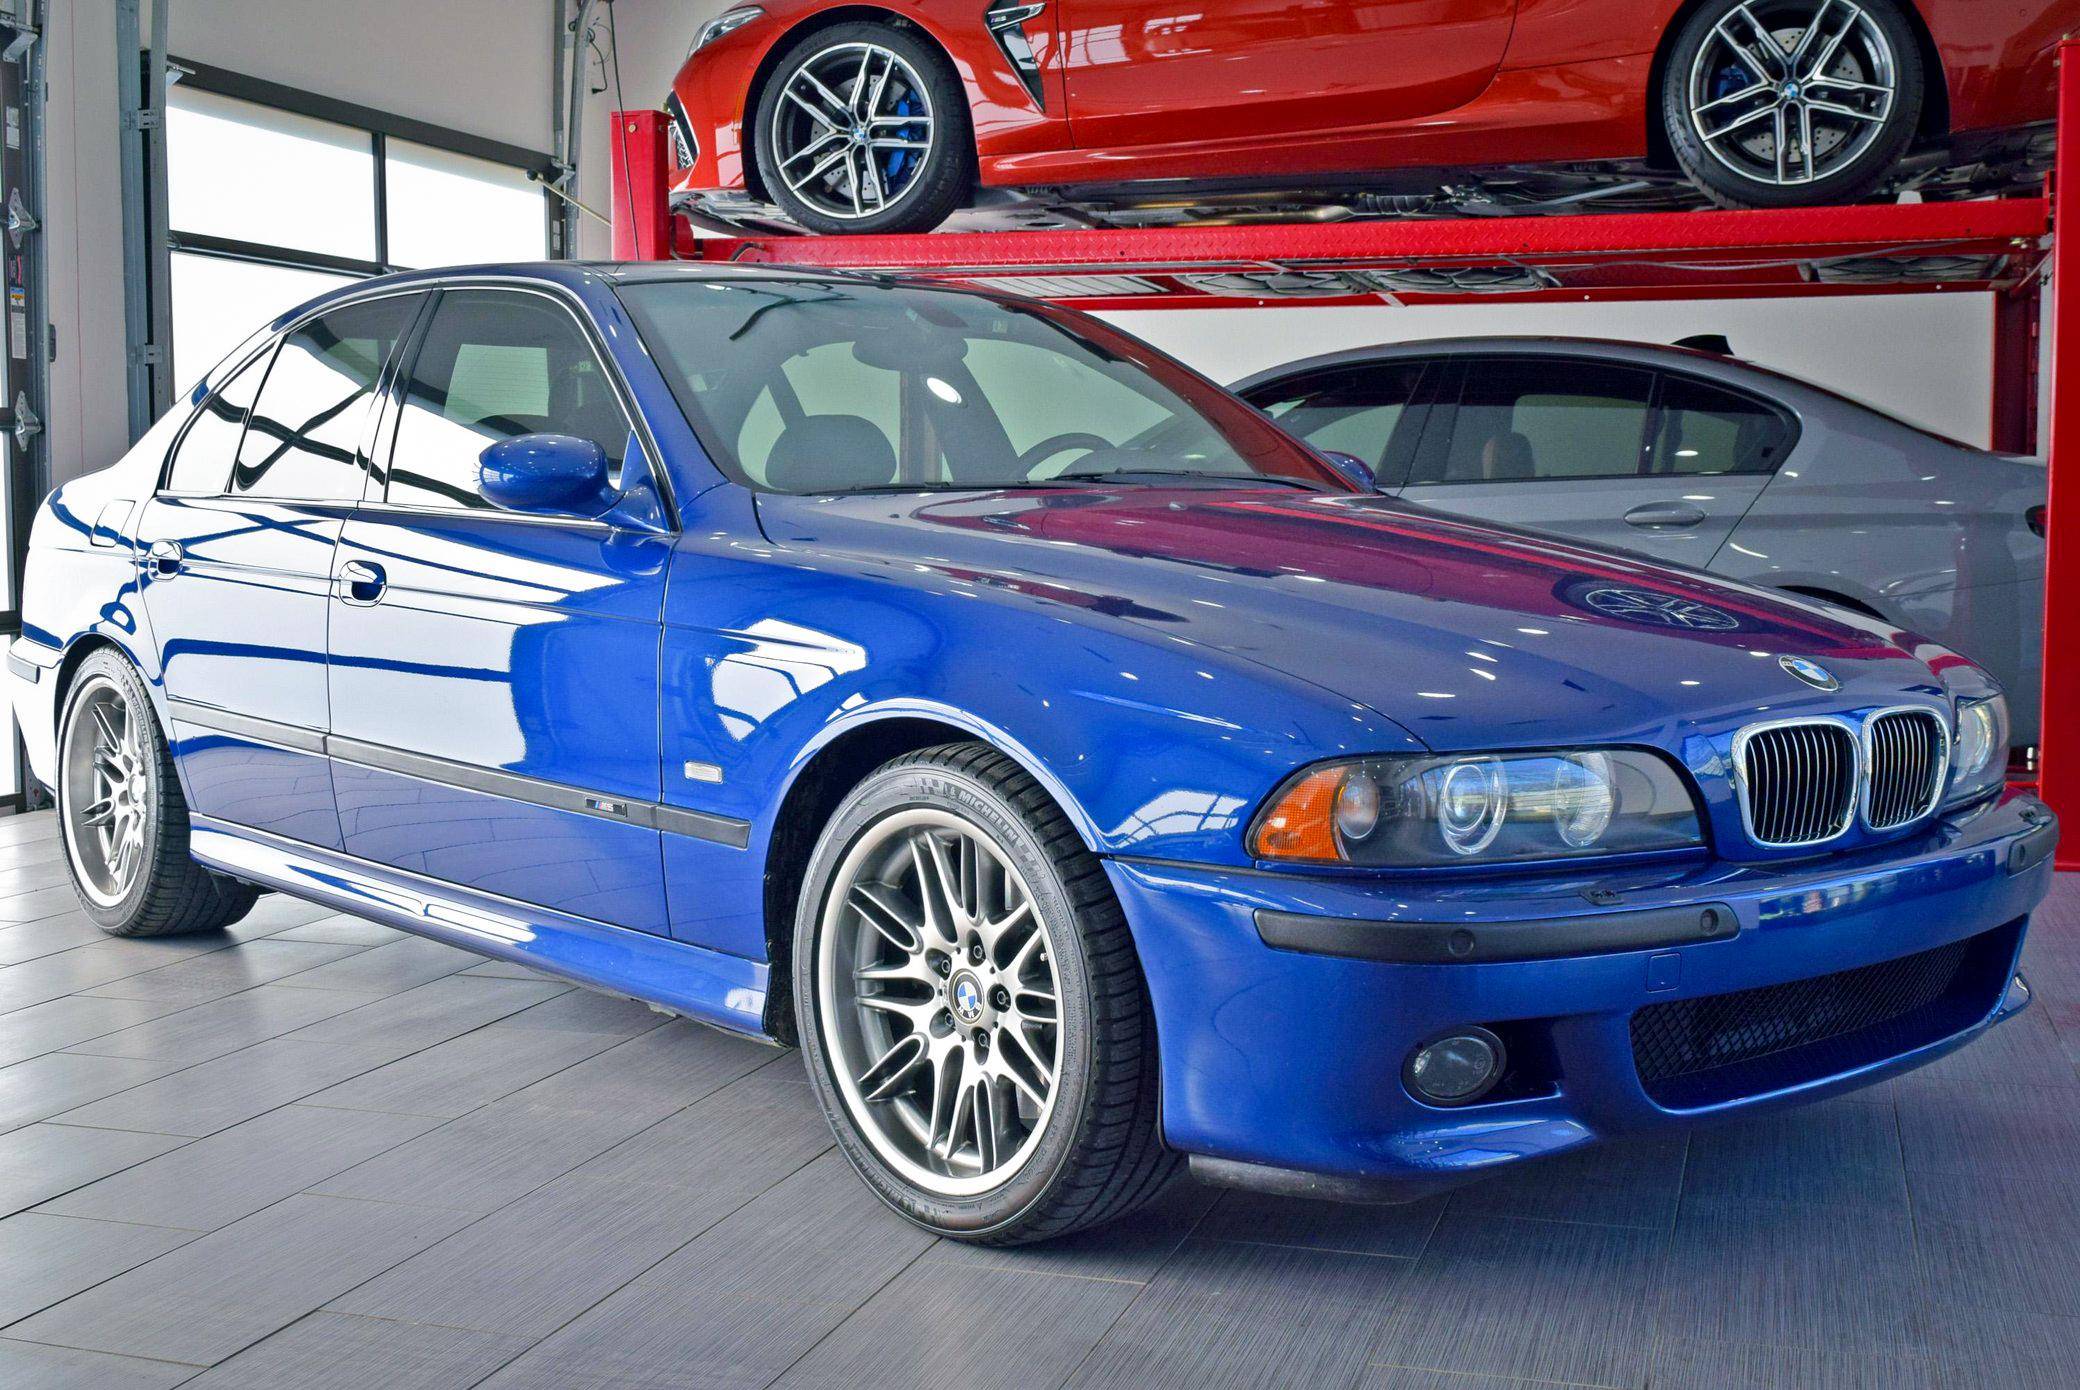 Le Mans Blue 2000 BMW M5 for sale on BaT Auctions - sold for